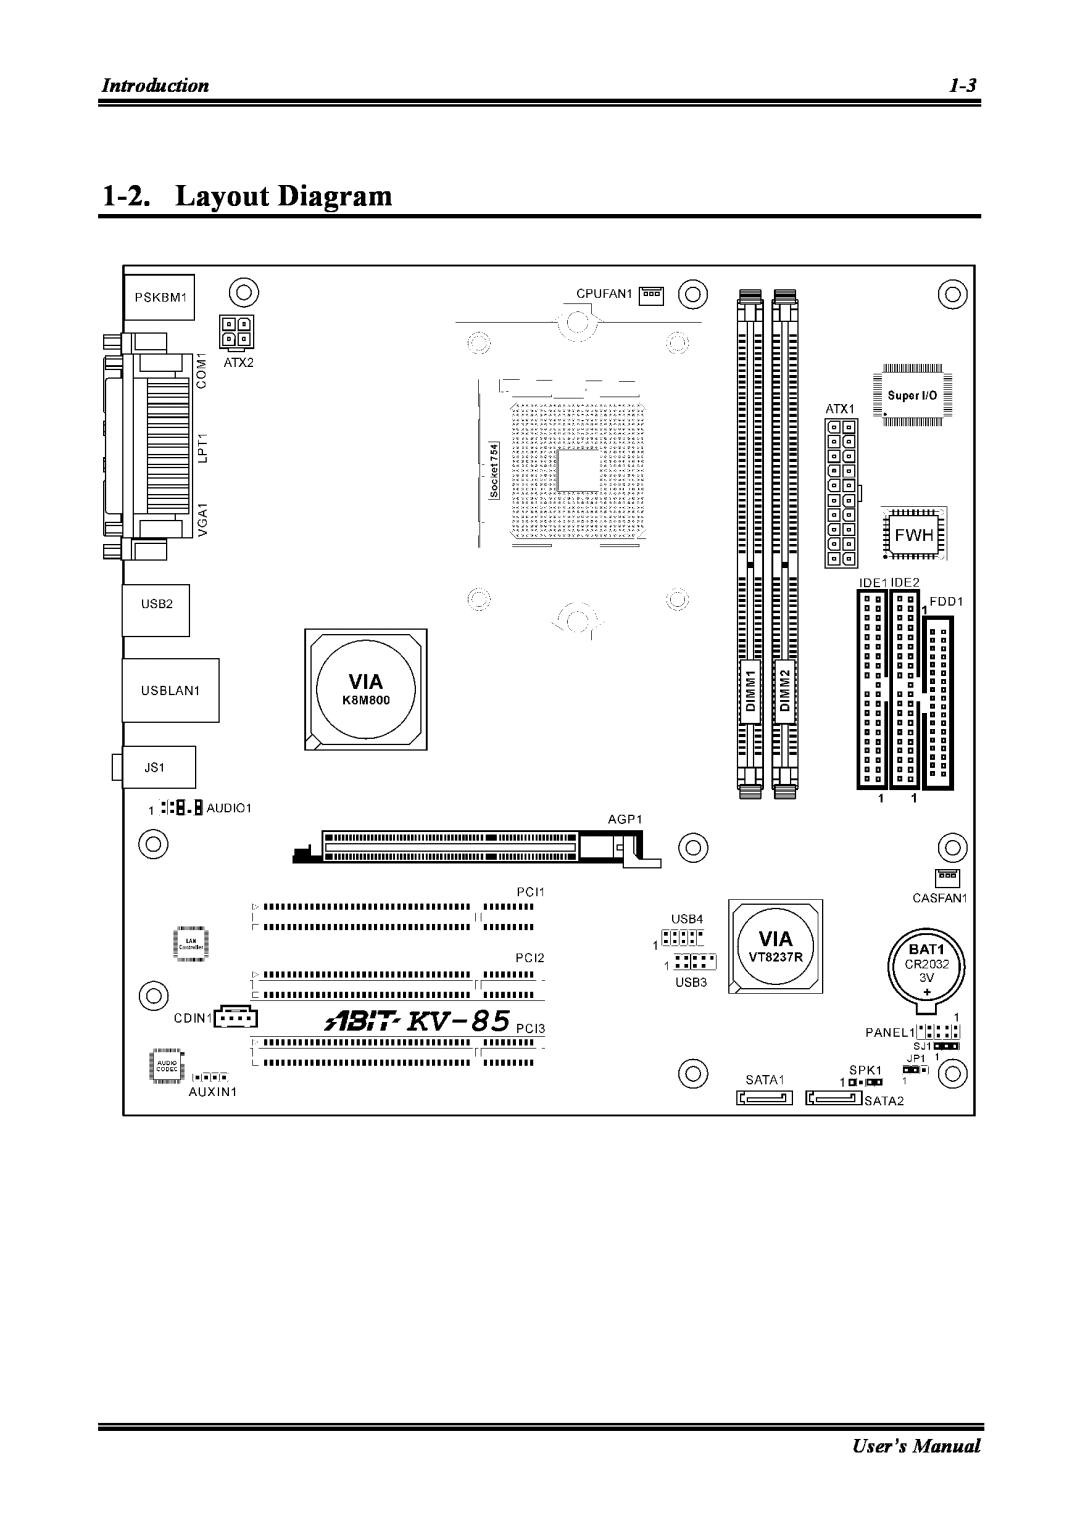 Abit KV-85 user manual Layout Diagram, Introduction, User’s Manual 